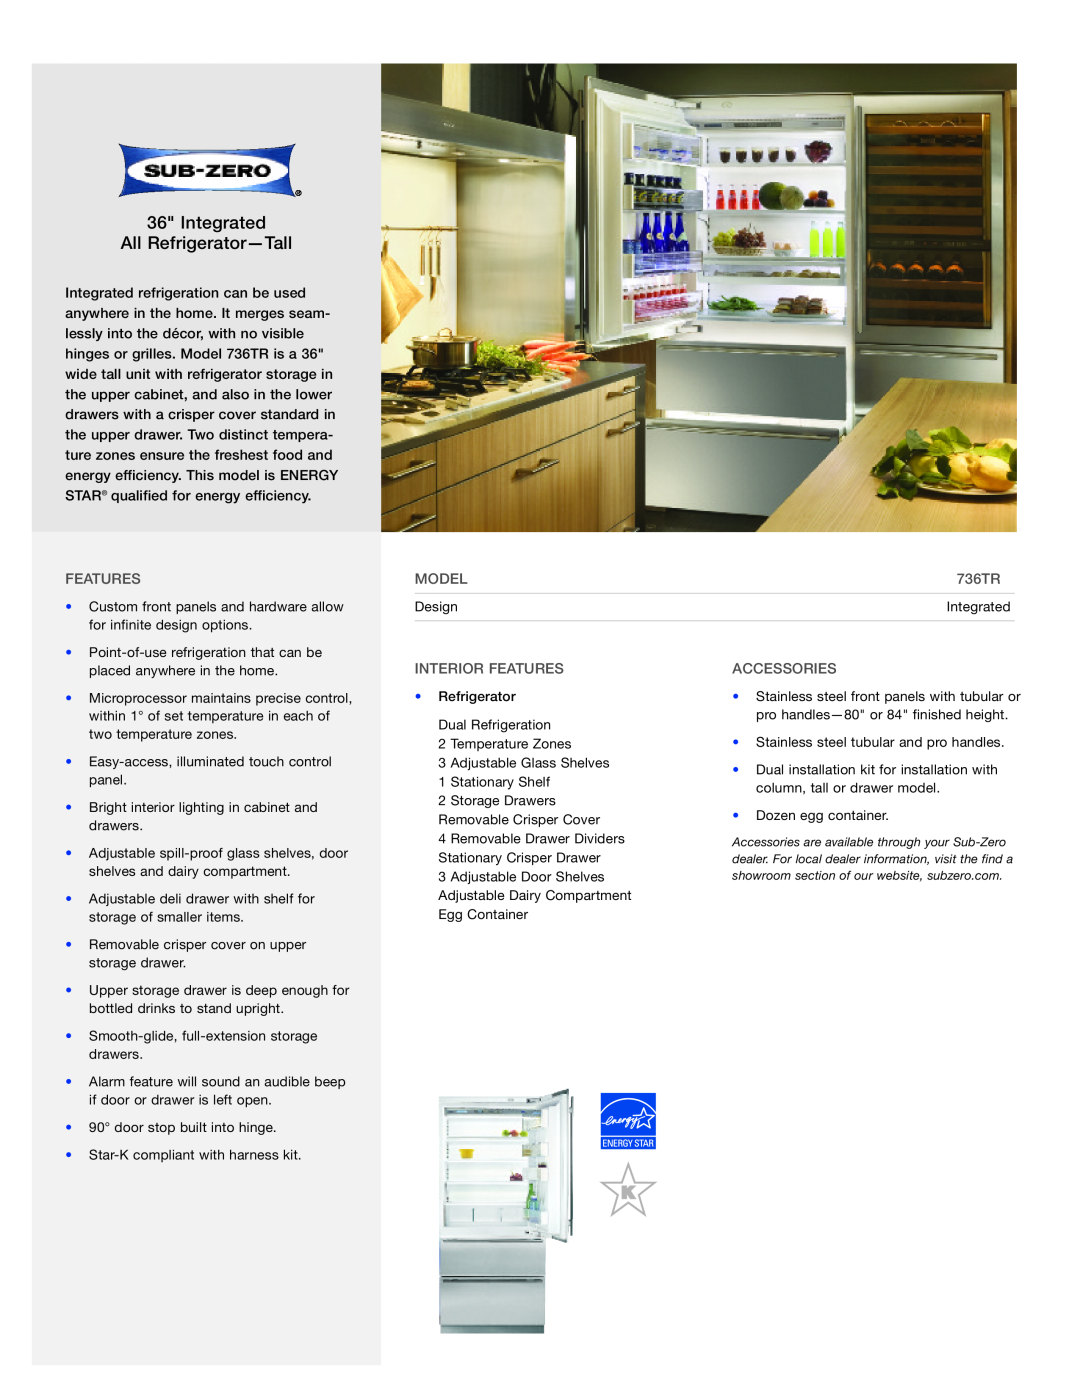 Sub-Zero 736TR manual Integrated All Refrigerator-Tall, Model, Interior Features, Accessories 